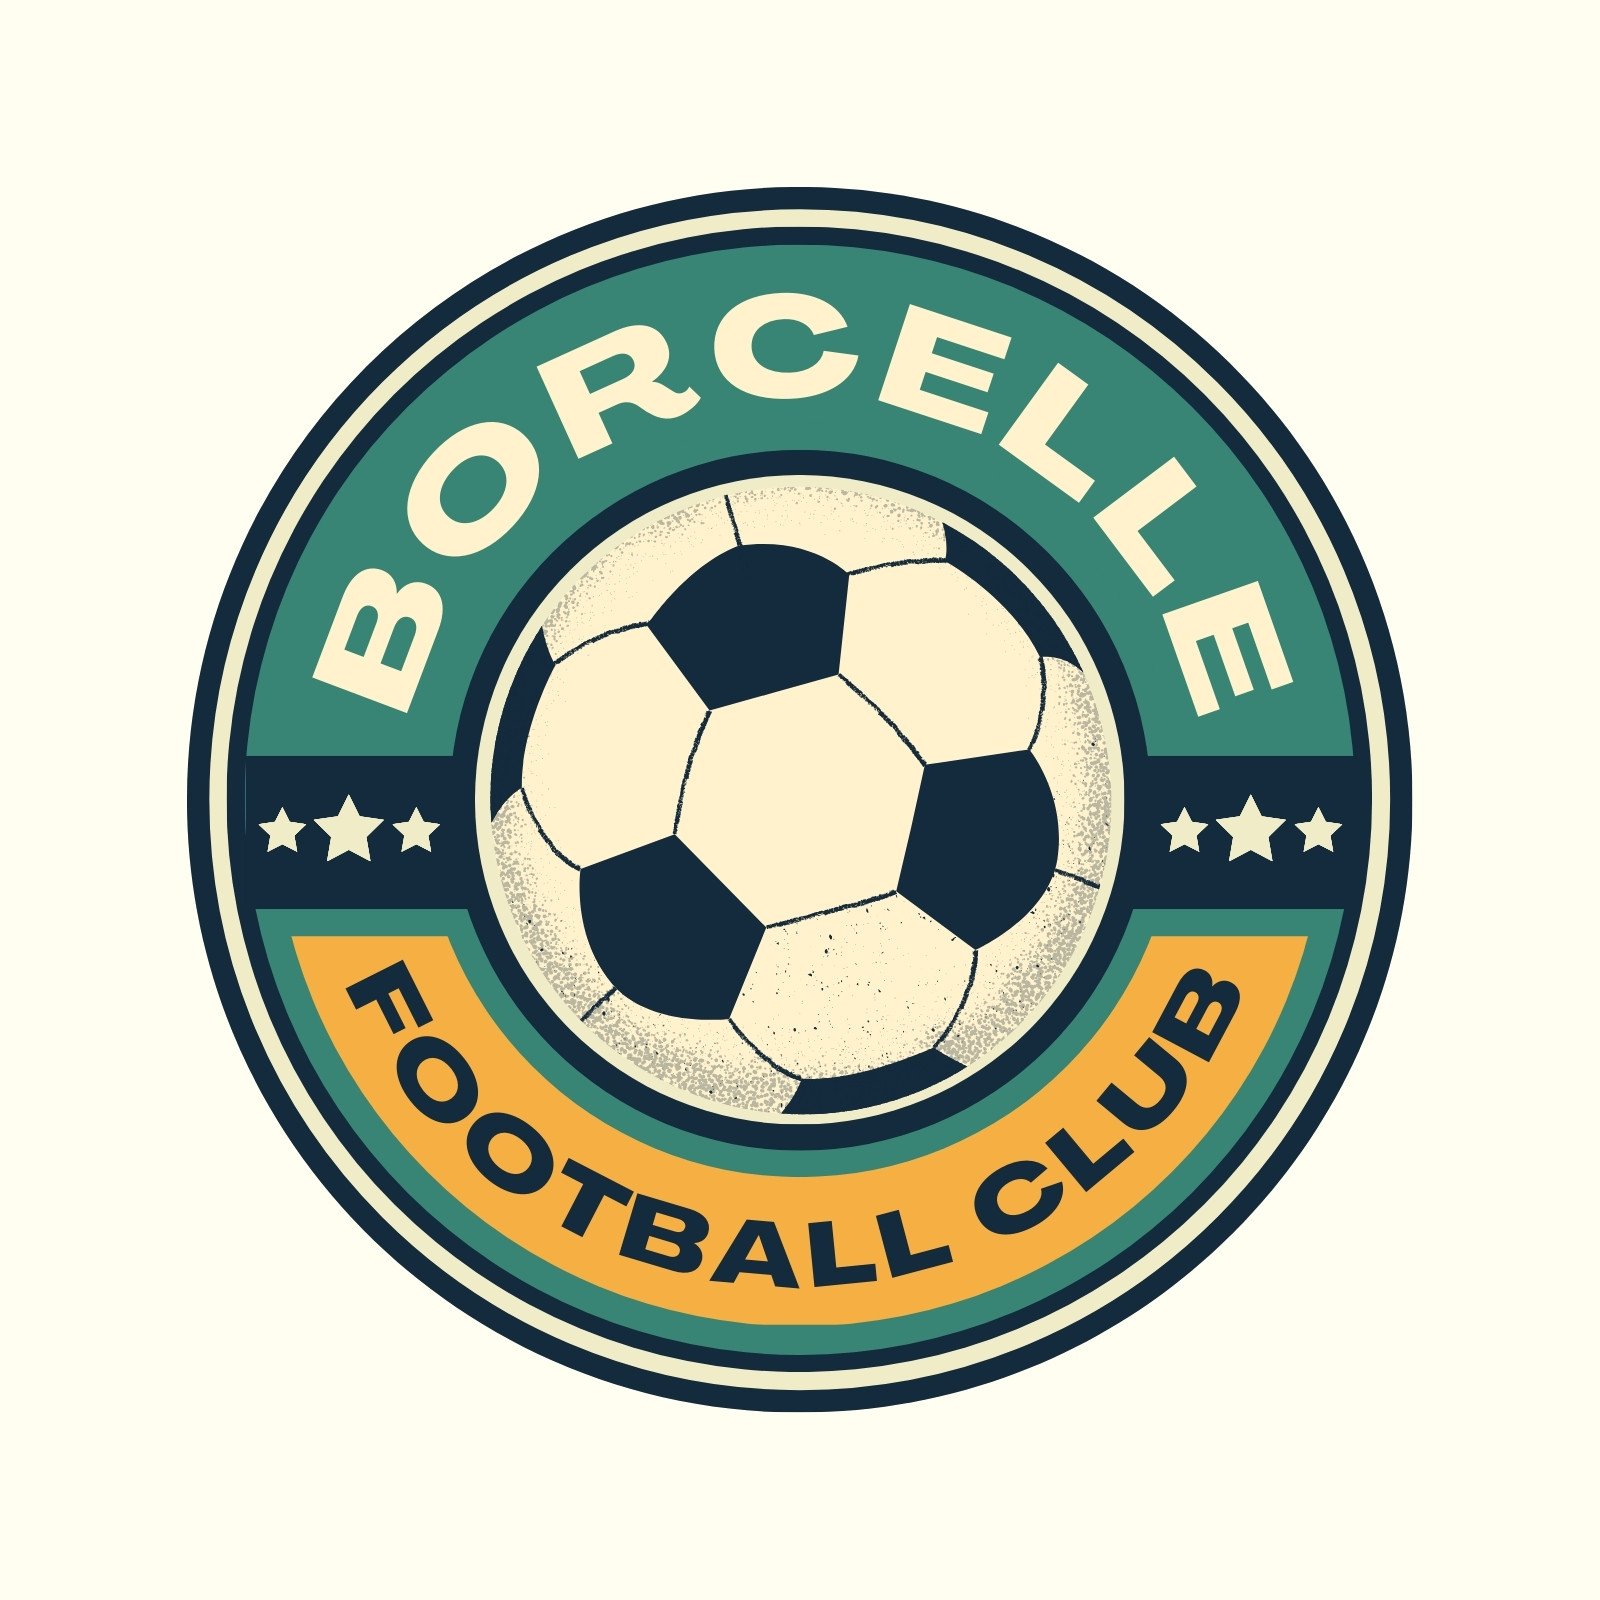 old football logos